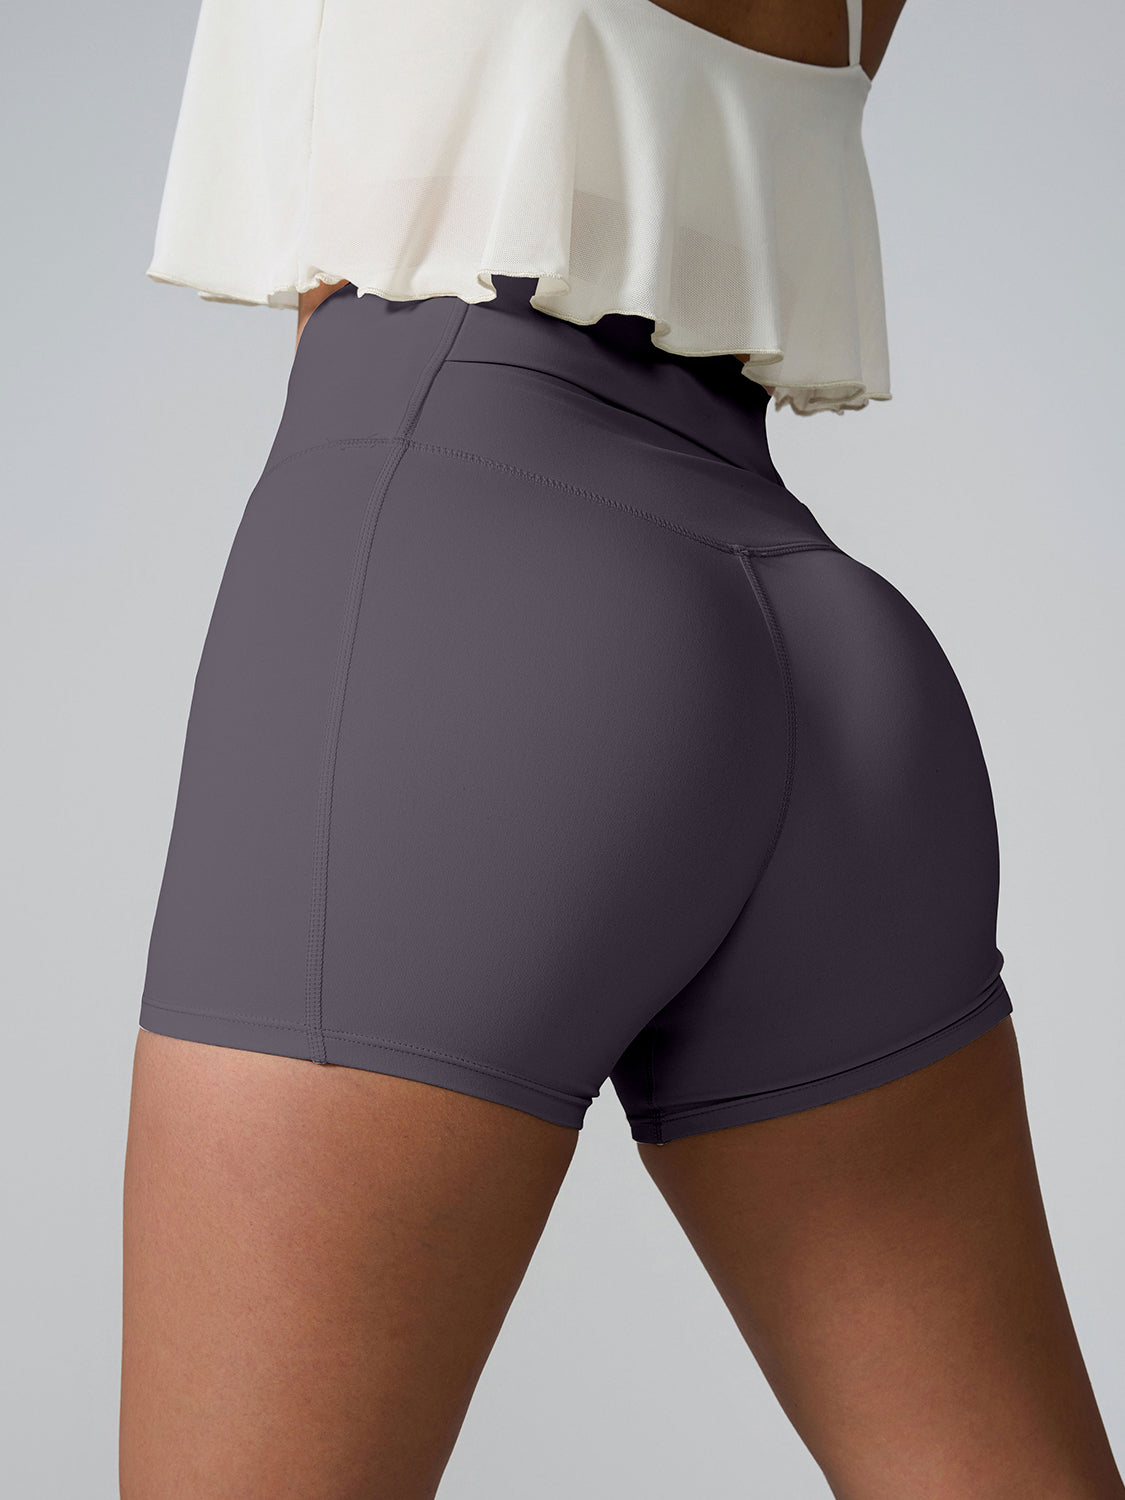 High Rise Athletic Shorts Wide Waistband Back Pocket Yoga Activewear